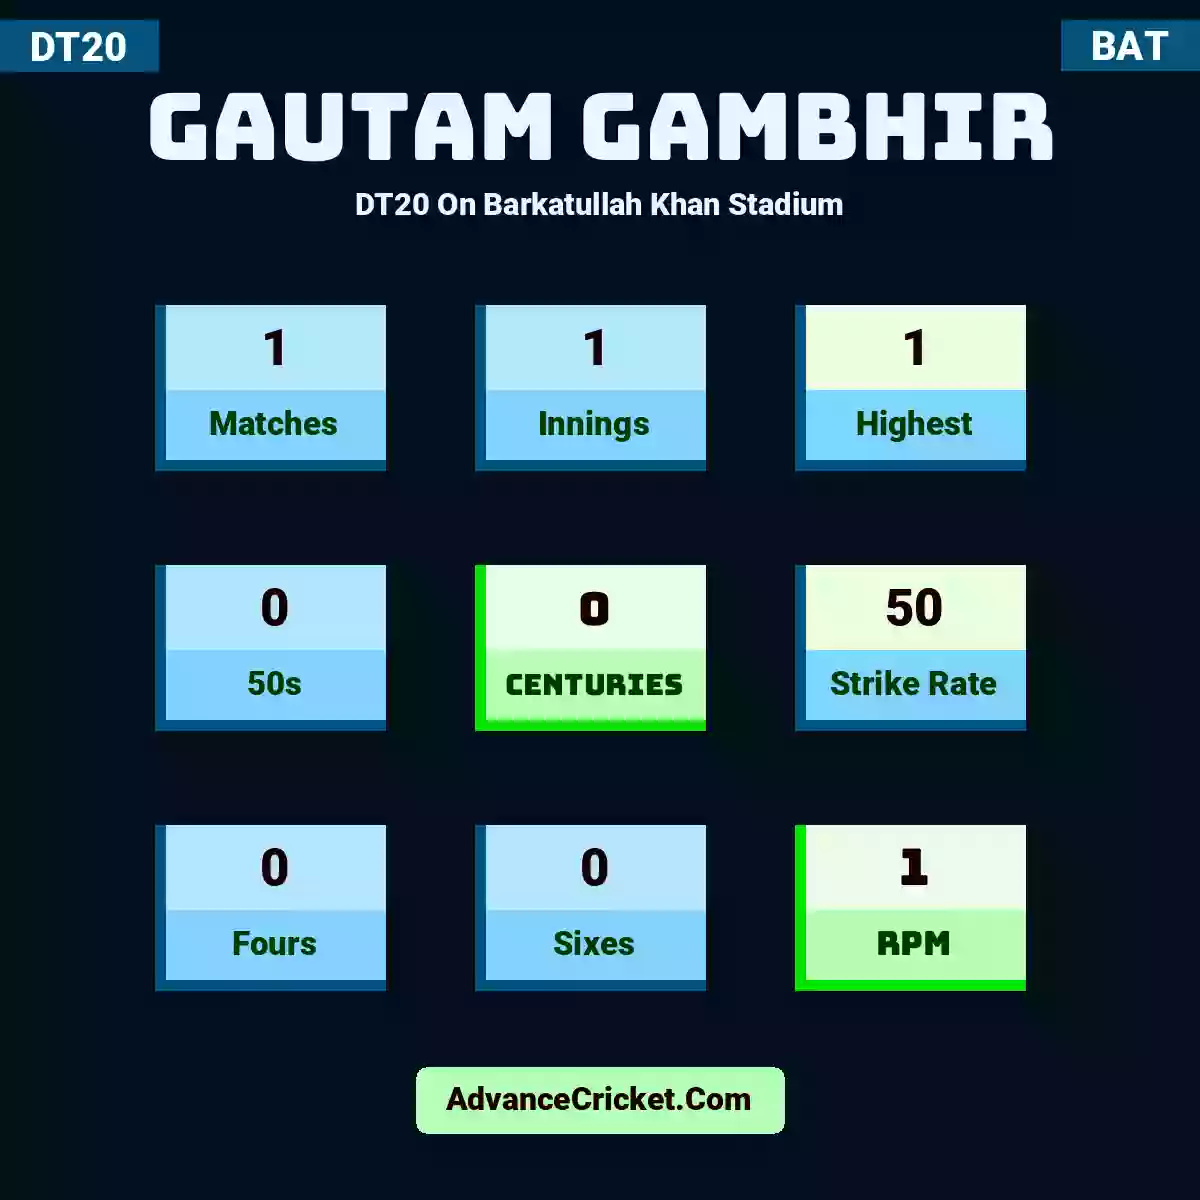 Gautam Gambhir DT20  On Barkatullah Khan Stadium, Gautam Gambhir played 1 matches, scored 1 runs as highest, 0 half-centuries, and 0 centuries, with a strike rate of 50. G.Gambhir hit 0 fours and 0 sixes, with an RPM of 1.